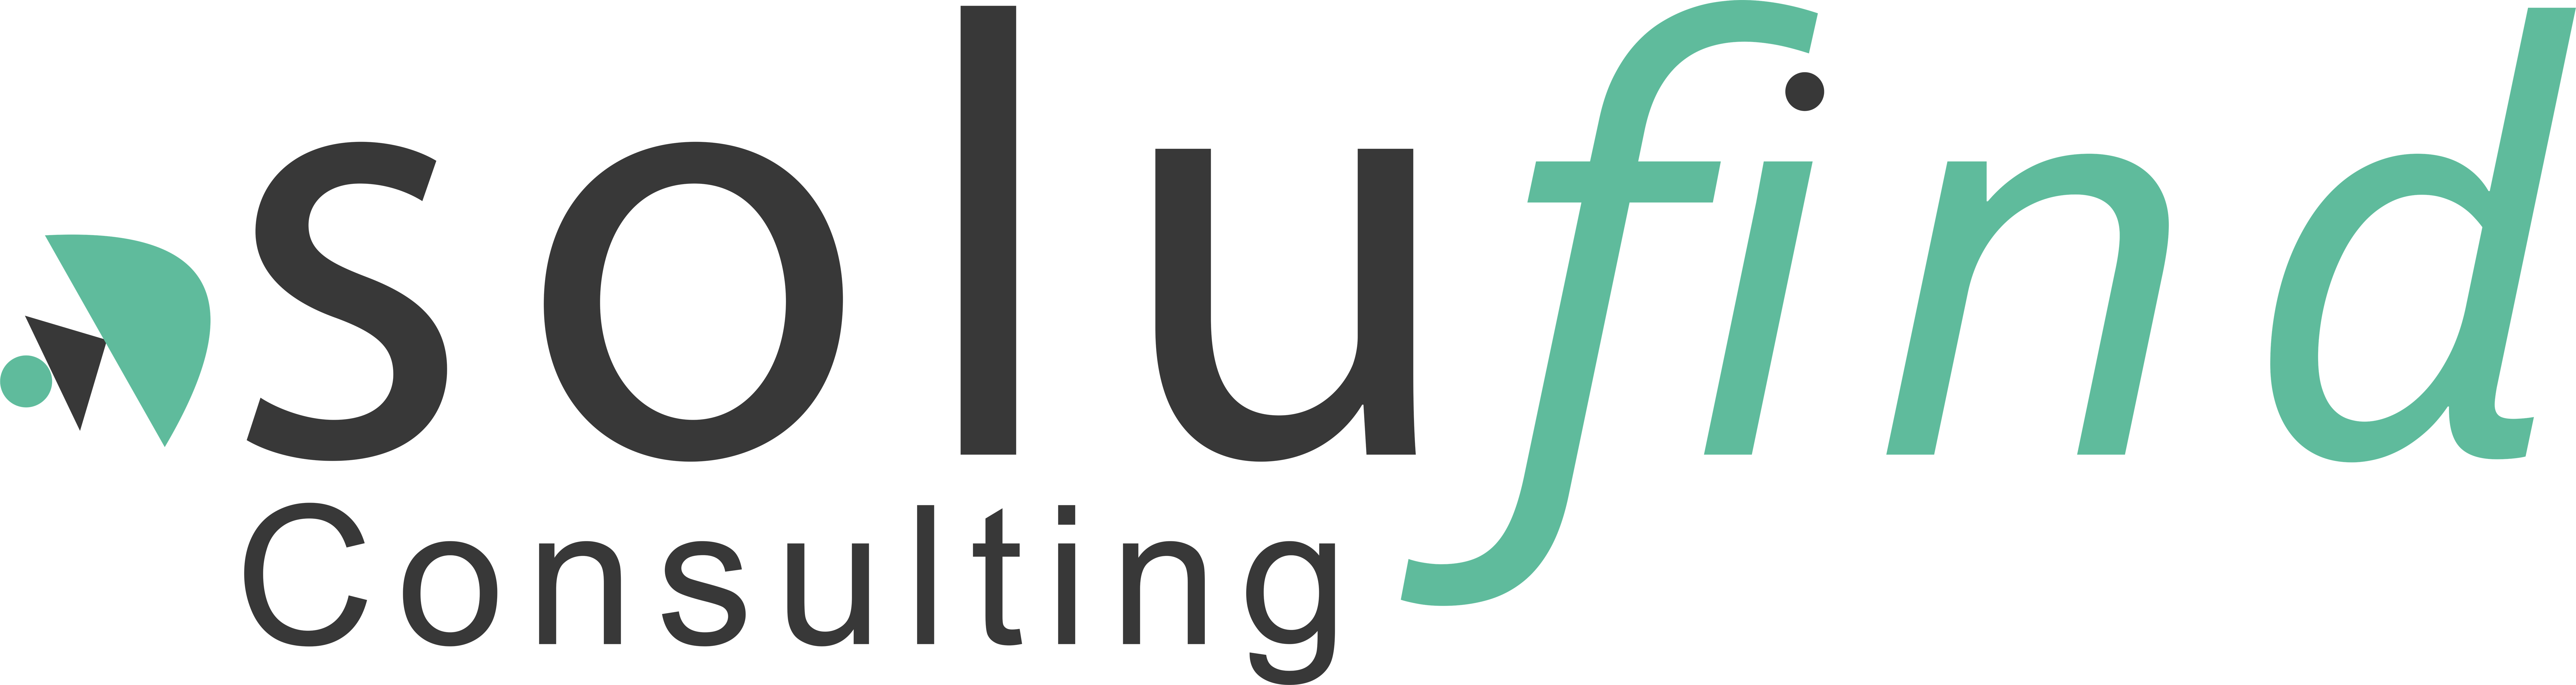 Datenschutzerklärung logo